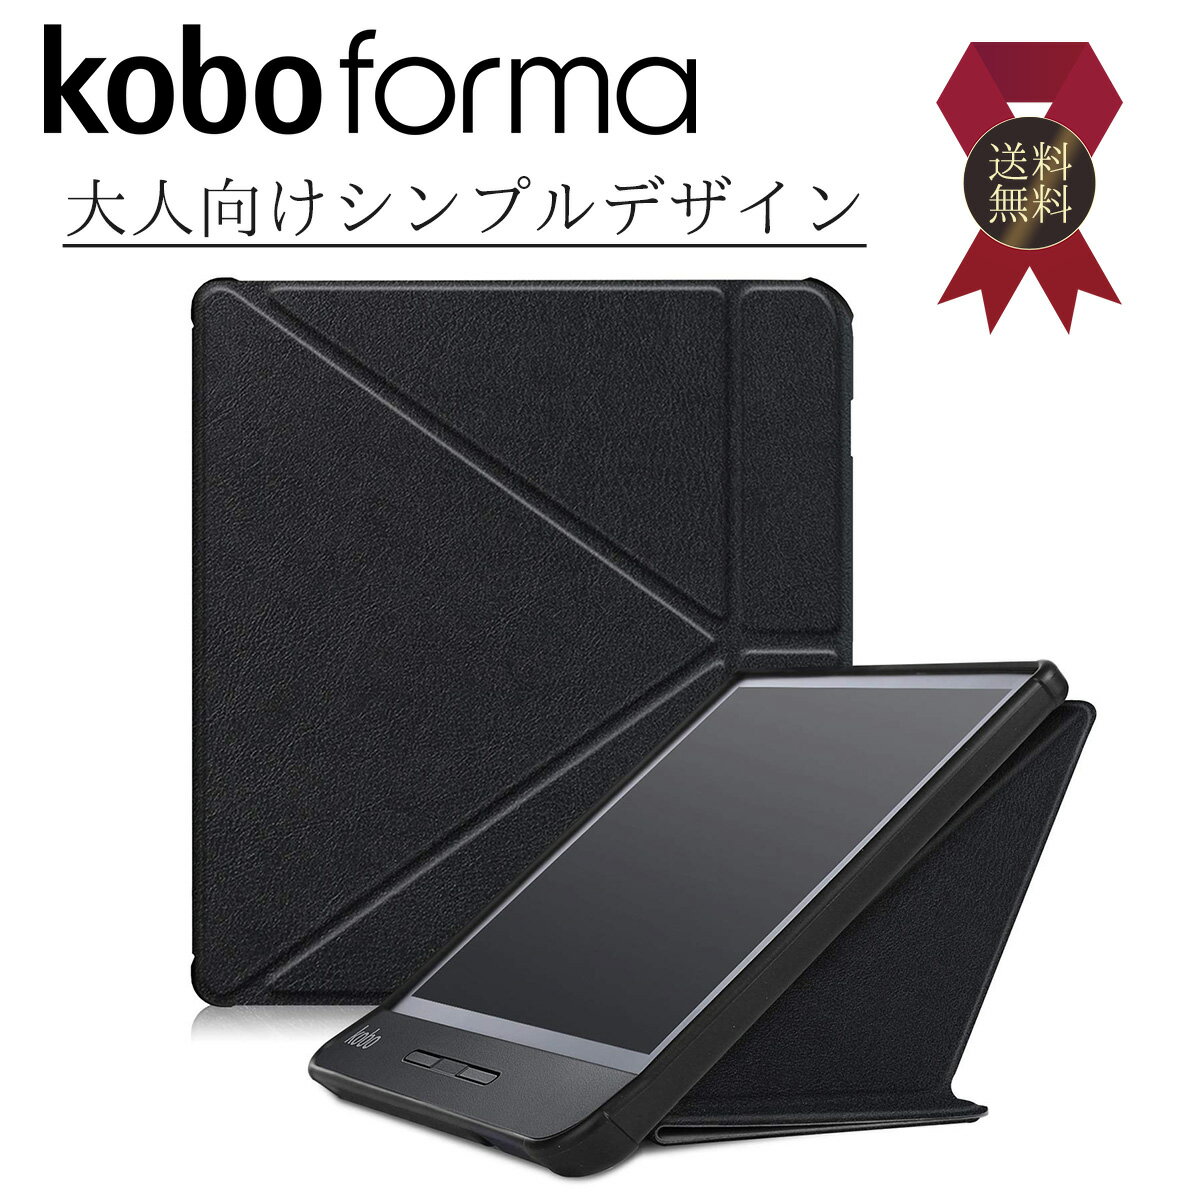 Kobo Forma ケース 電子書籍 Kind...の商品画像